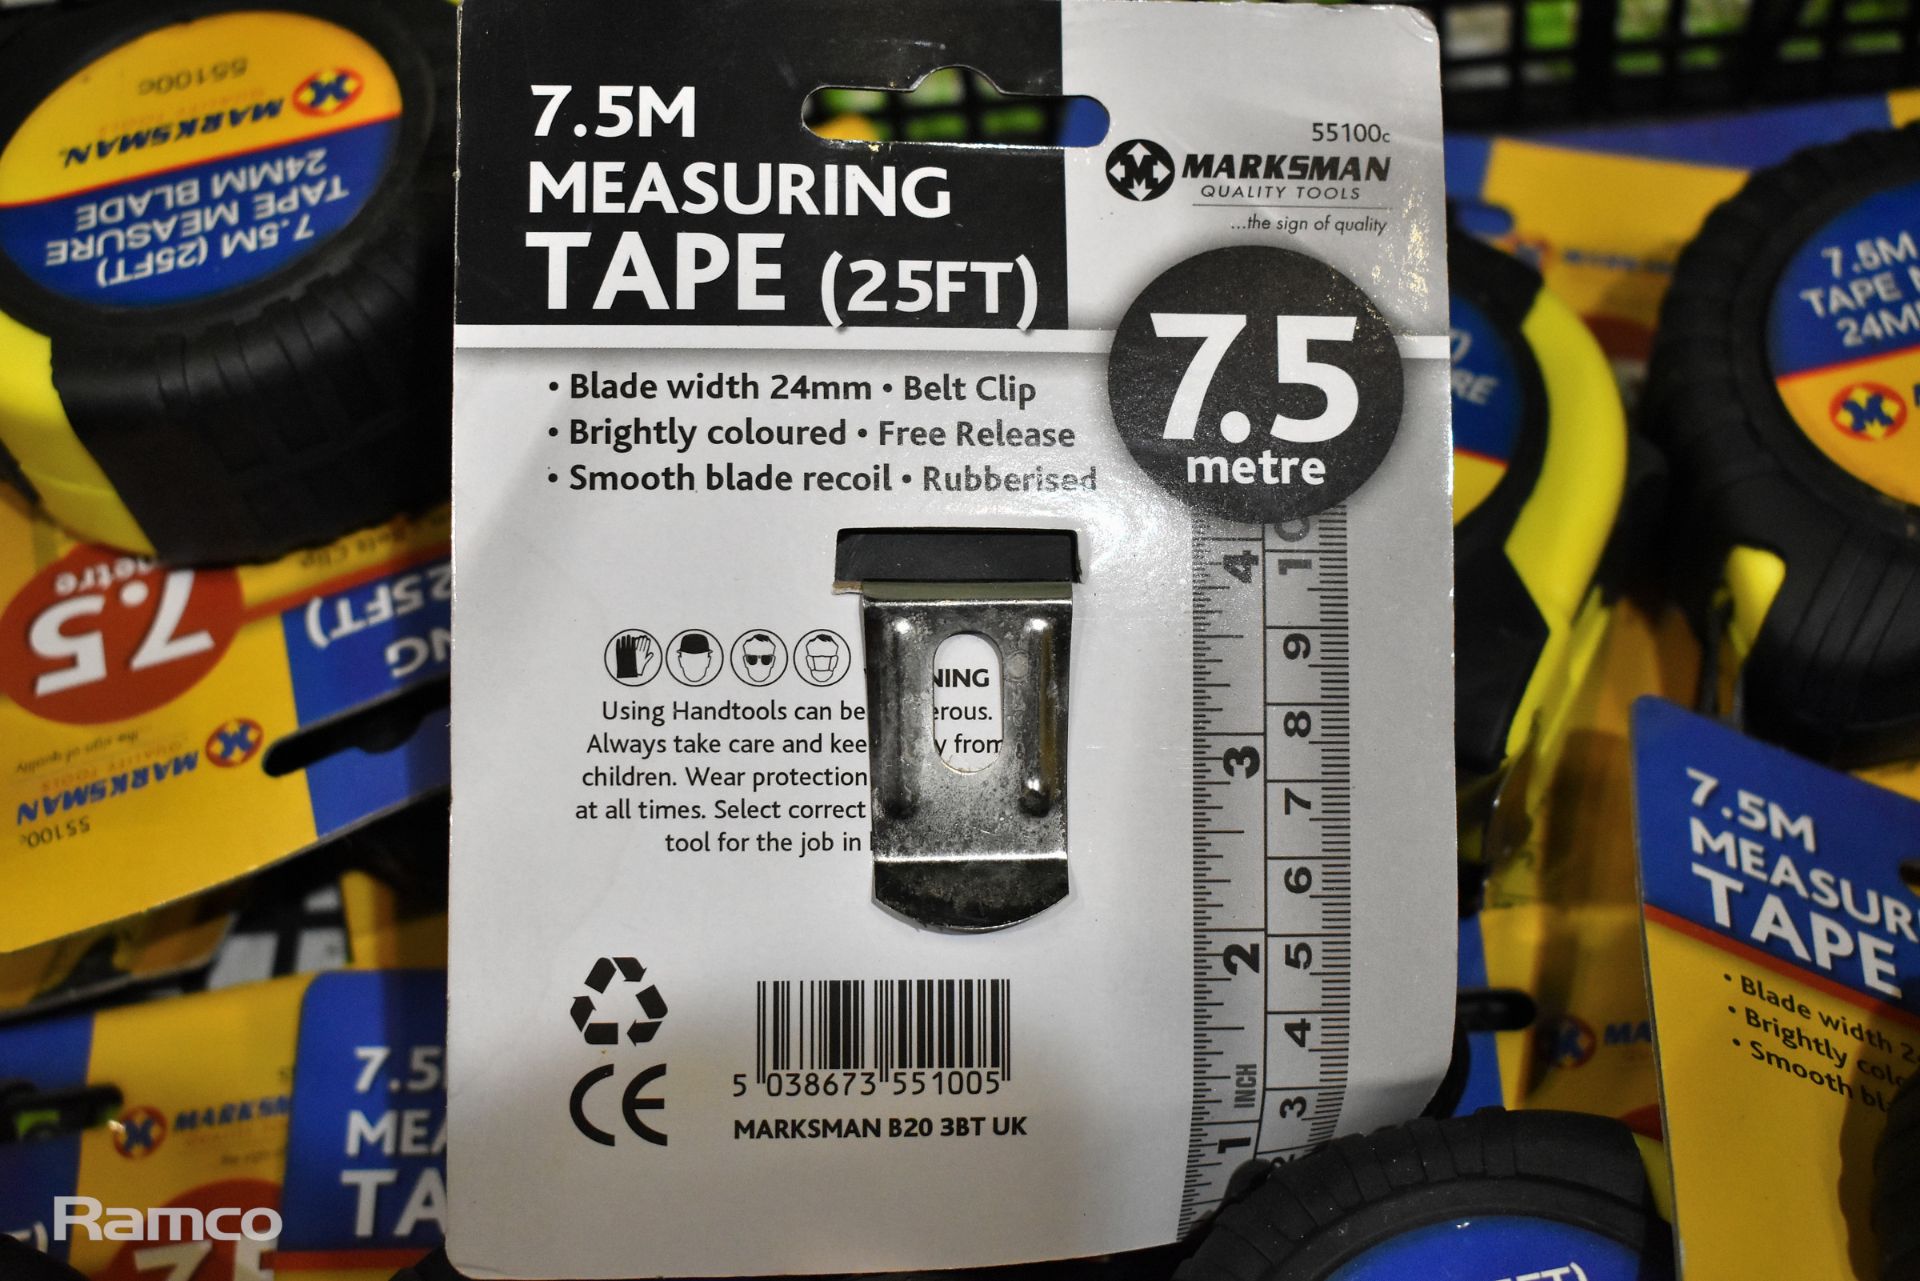 10x Marksman 7.5m tape measures - Image 3 of 3